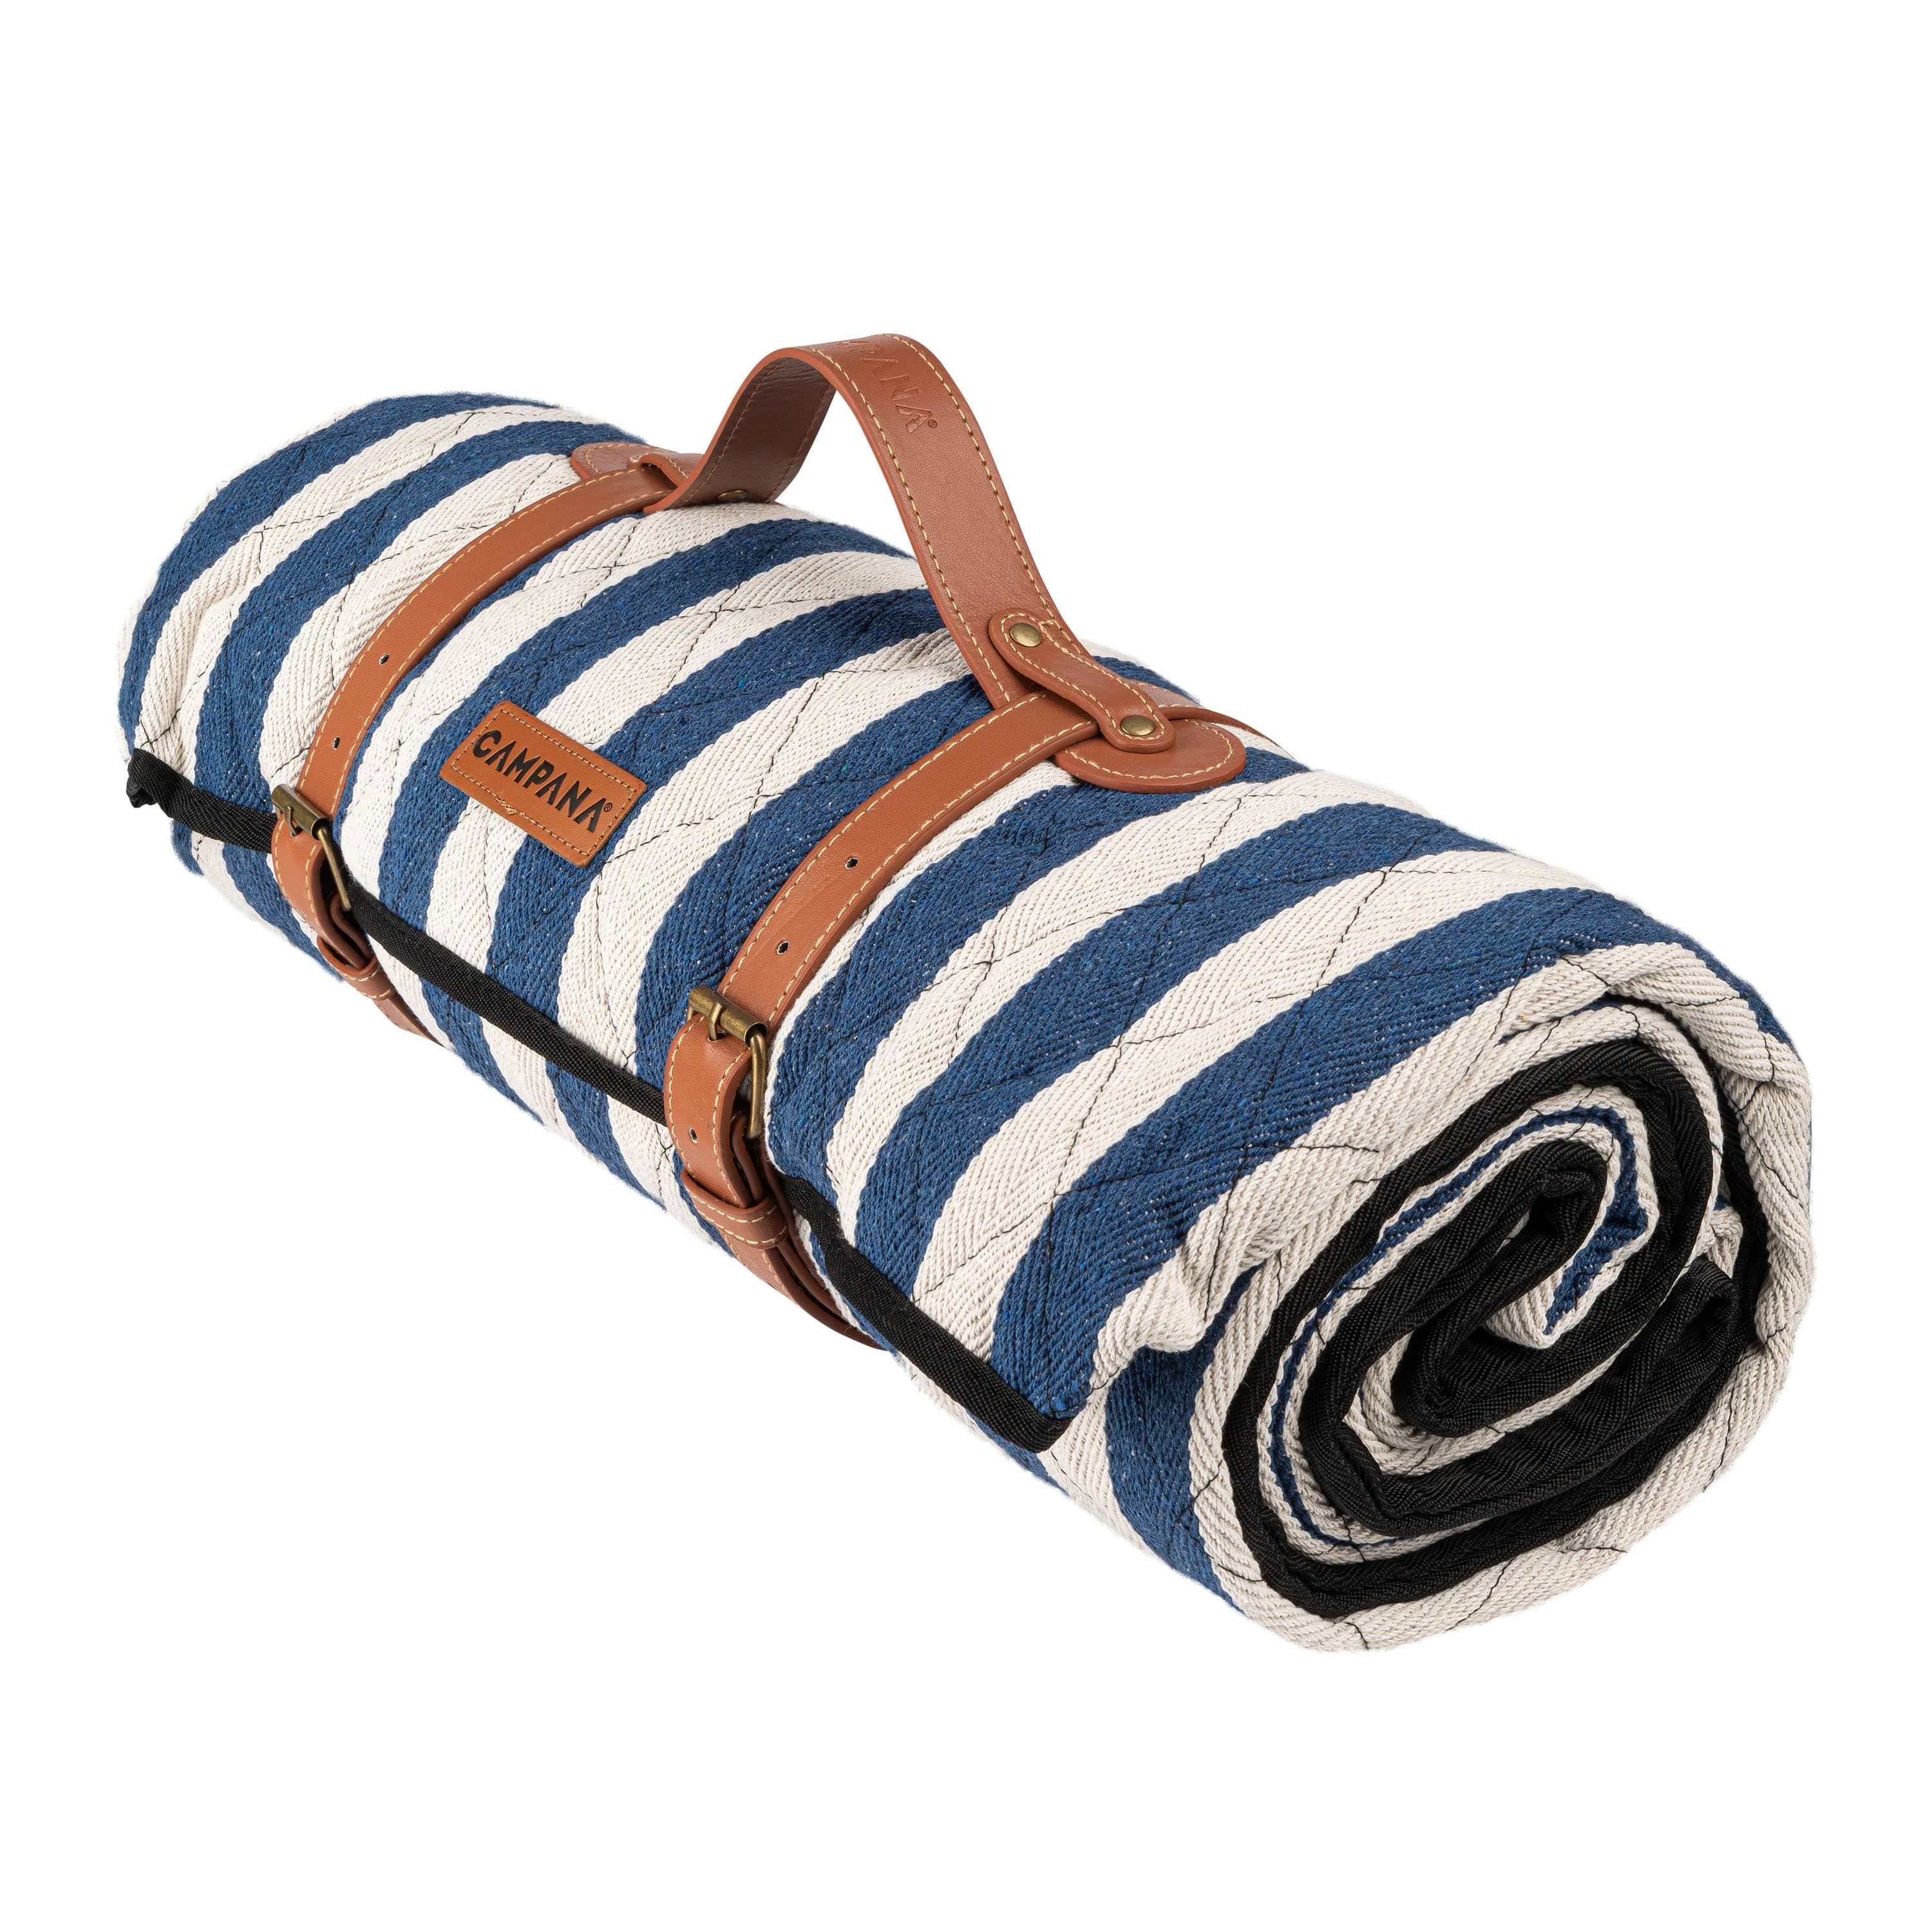 Cloth washable picnic mat